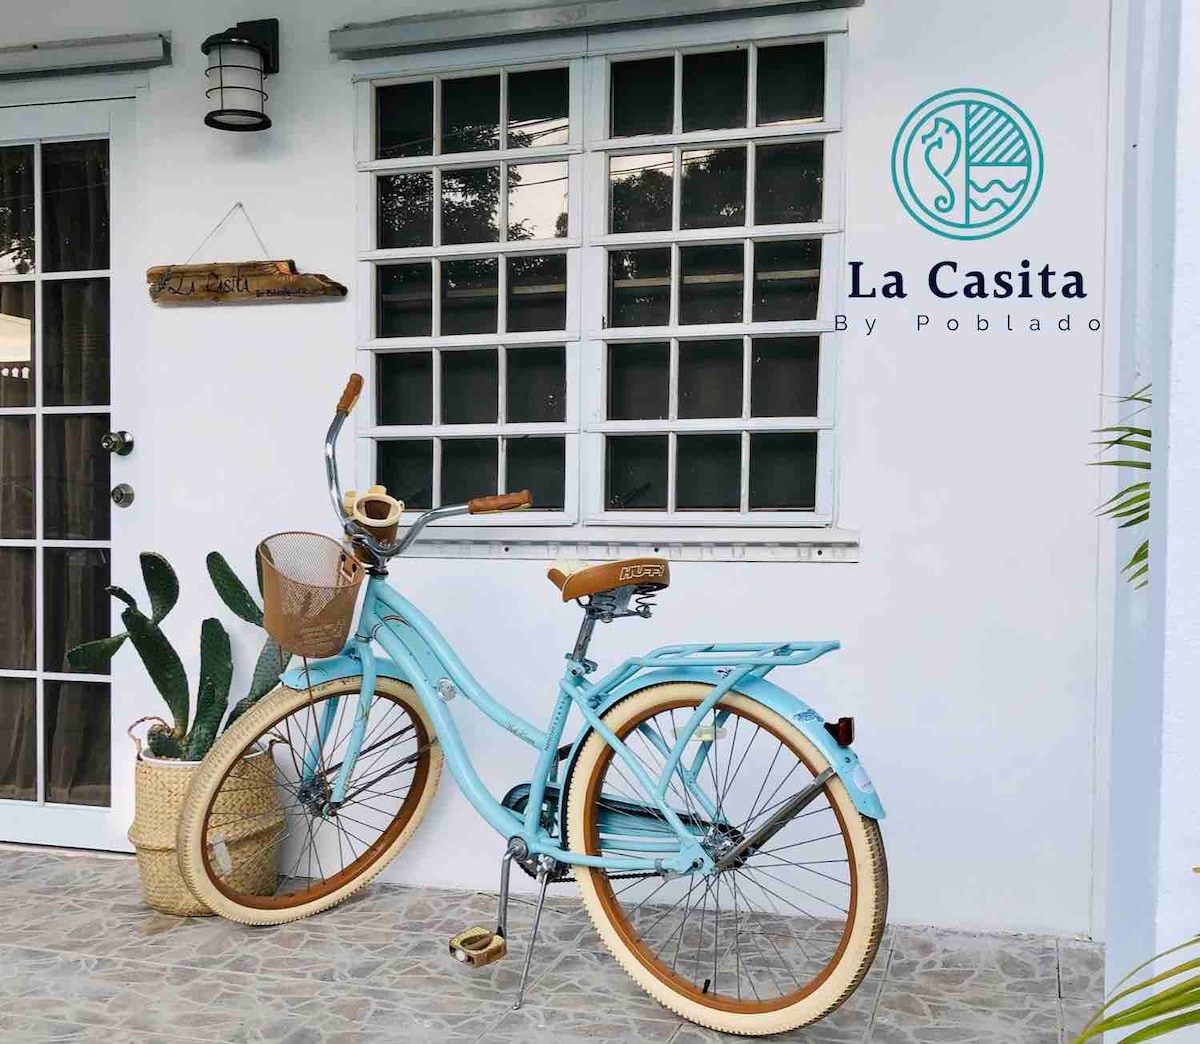 La Casita by Poblado
(Solar Powered & Bikes Incld)